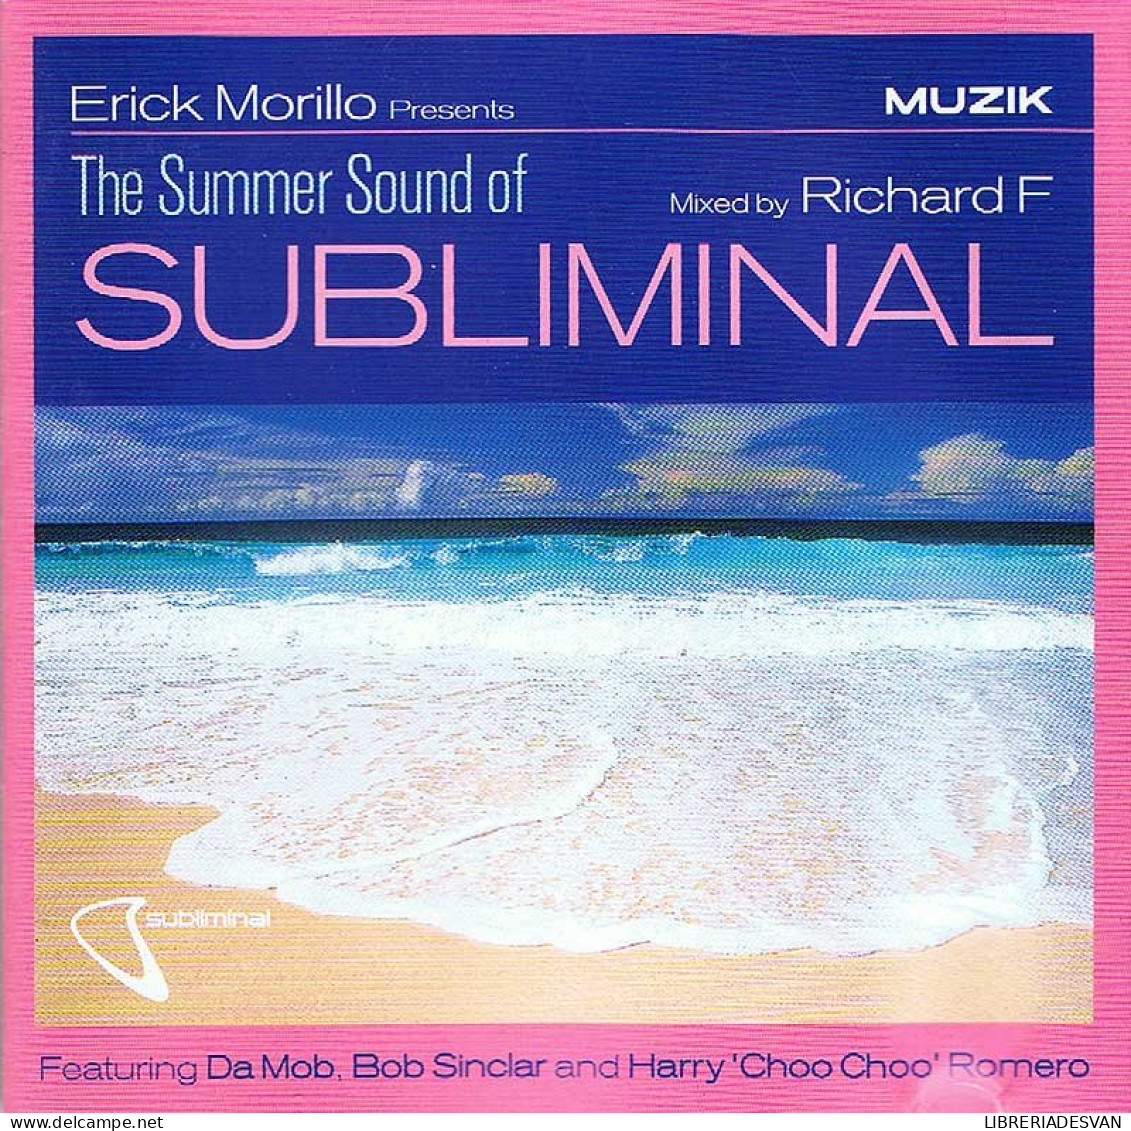 Erik Morillo Y Richard F. - The Summer Sound Of Subliminal. CD - Dance, Techno & House